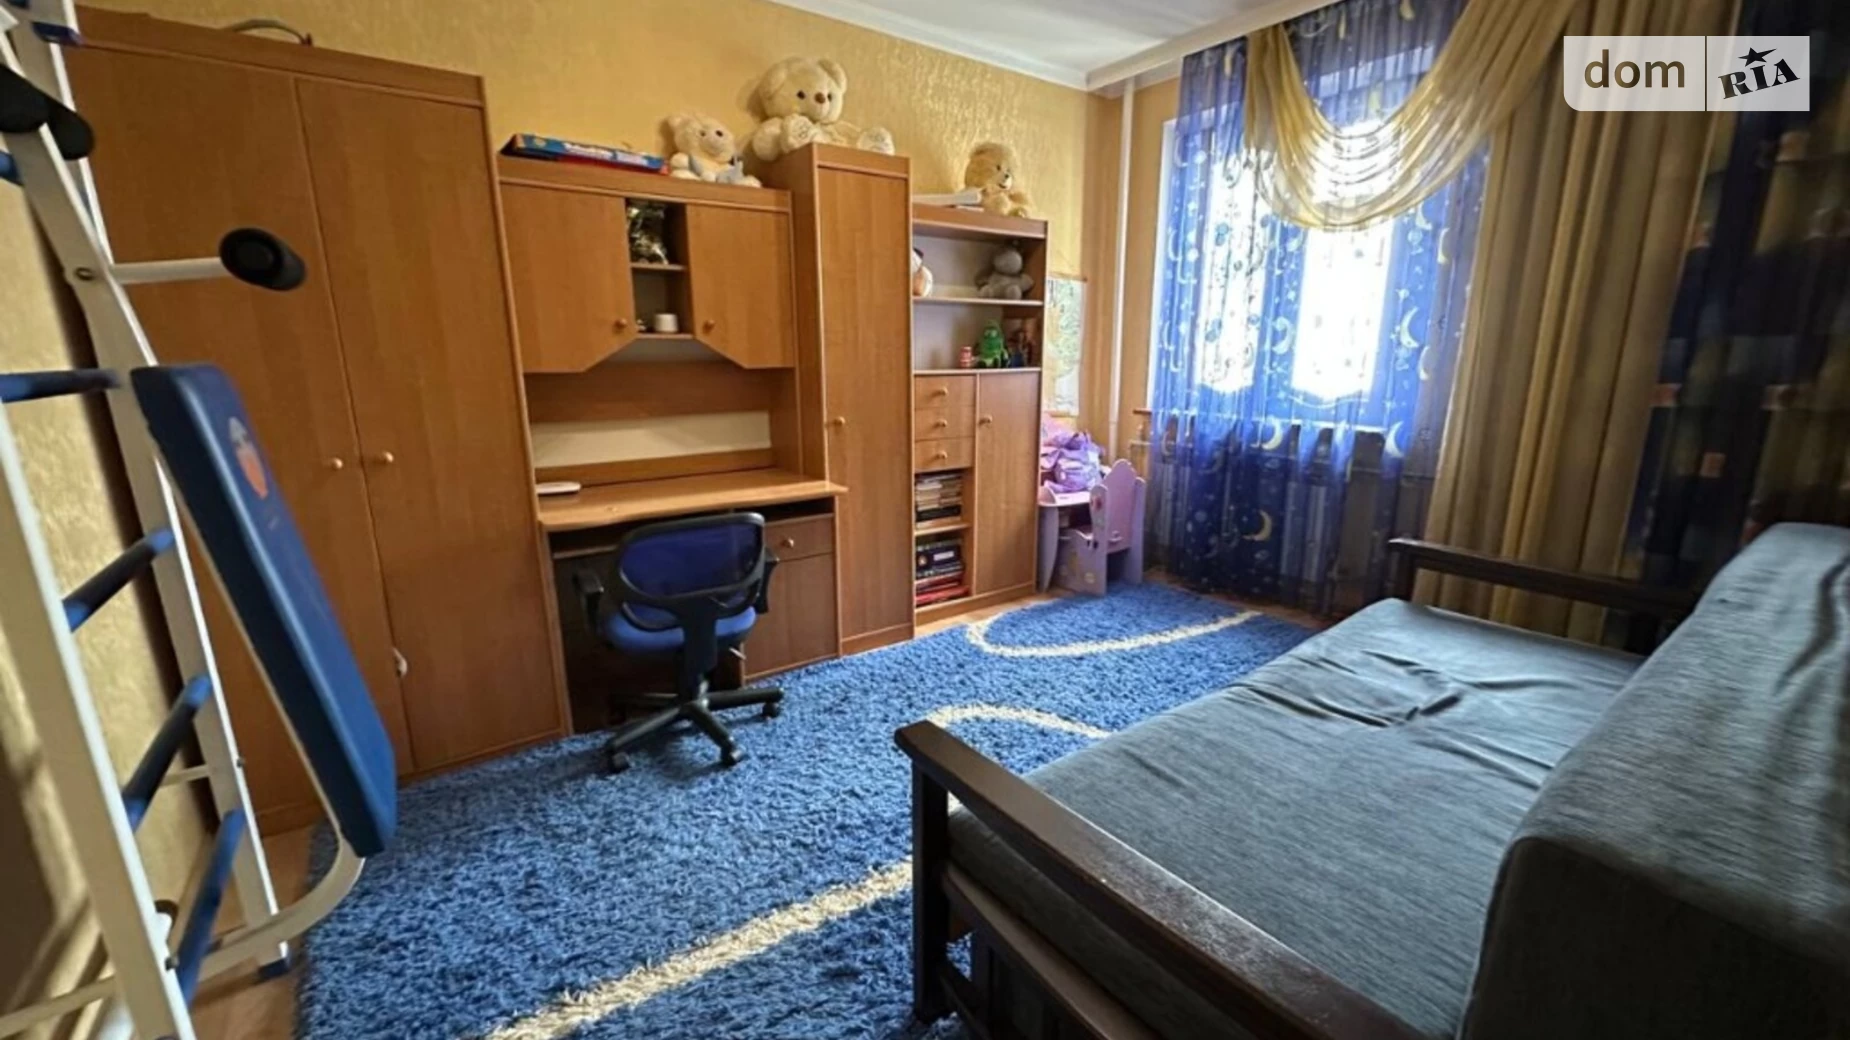 Продається 4-кімнатна квартира 86 кв. м у Хмельницькому, вул. Панаса Мирного - фото 4